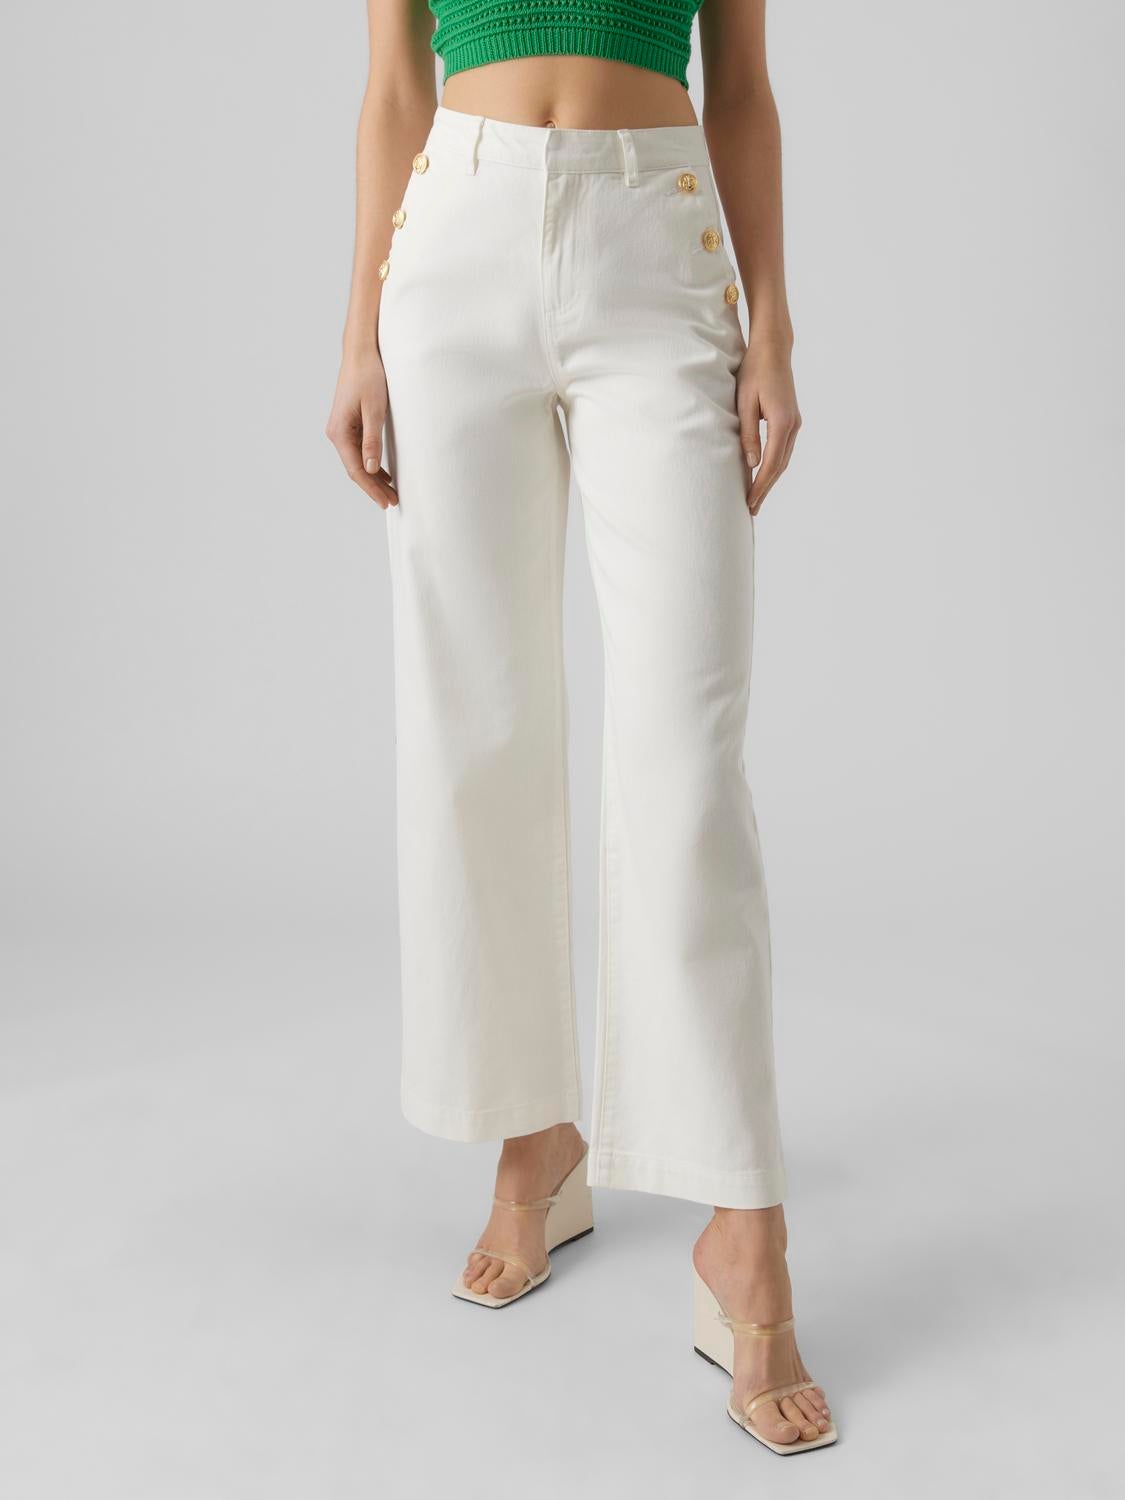 Share 151+ vero moda white trousers best